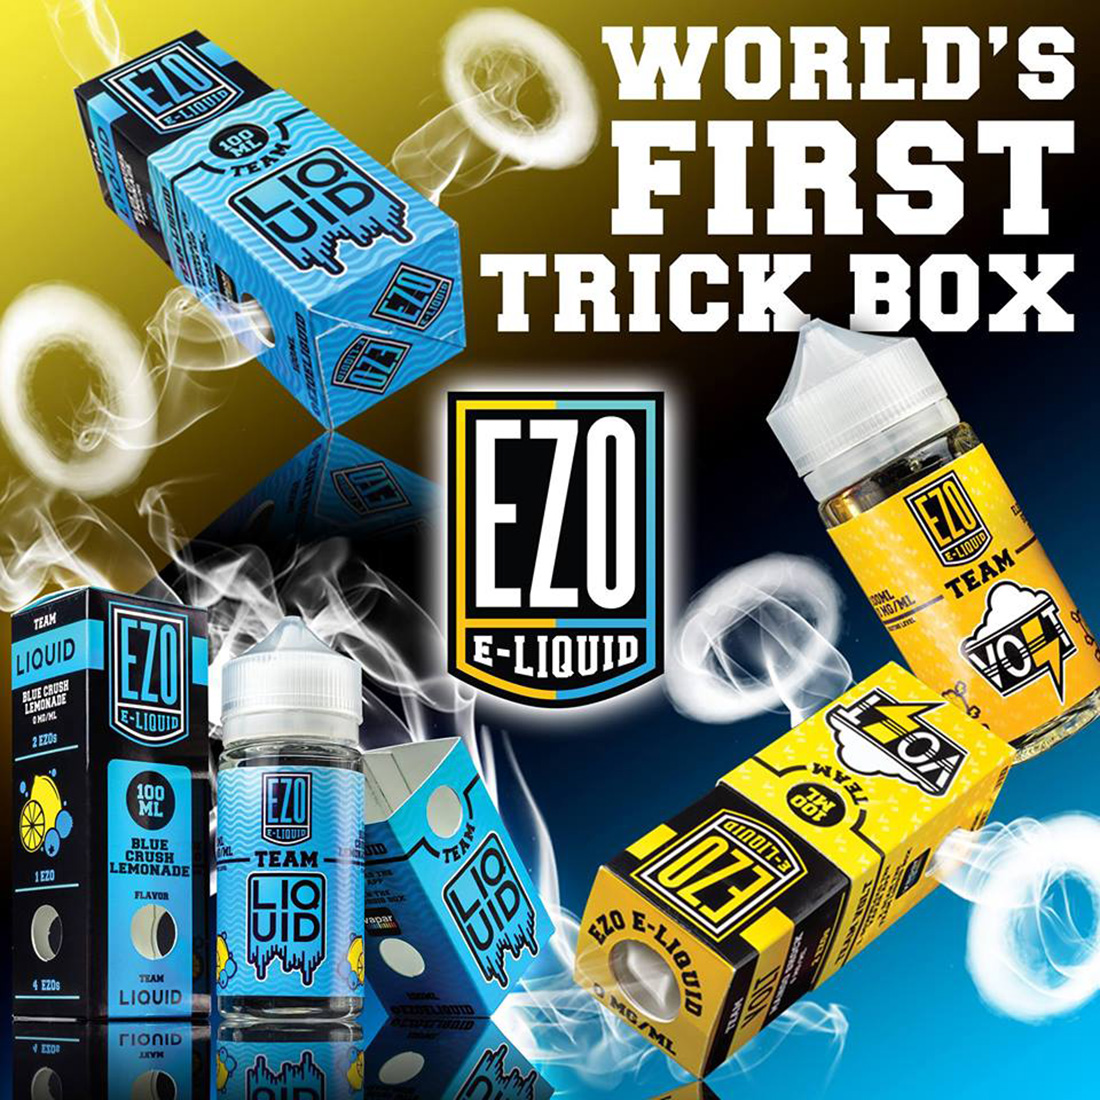 Blue Crush Lemonade (Team Liquid) - EZO E-liquid